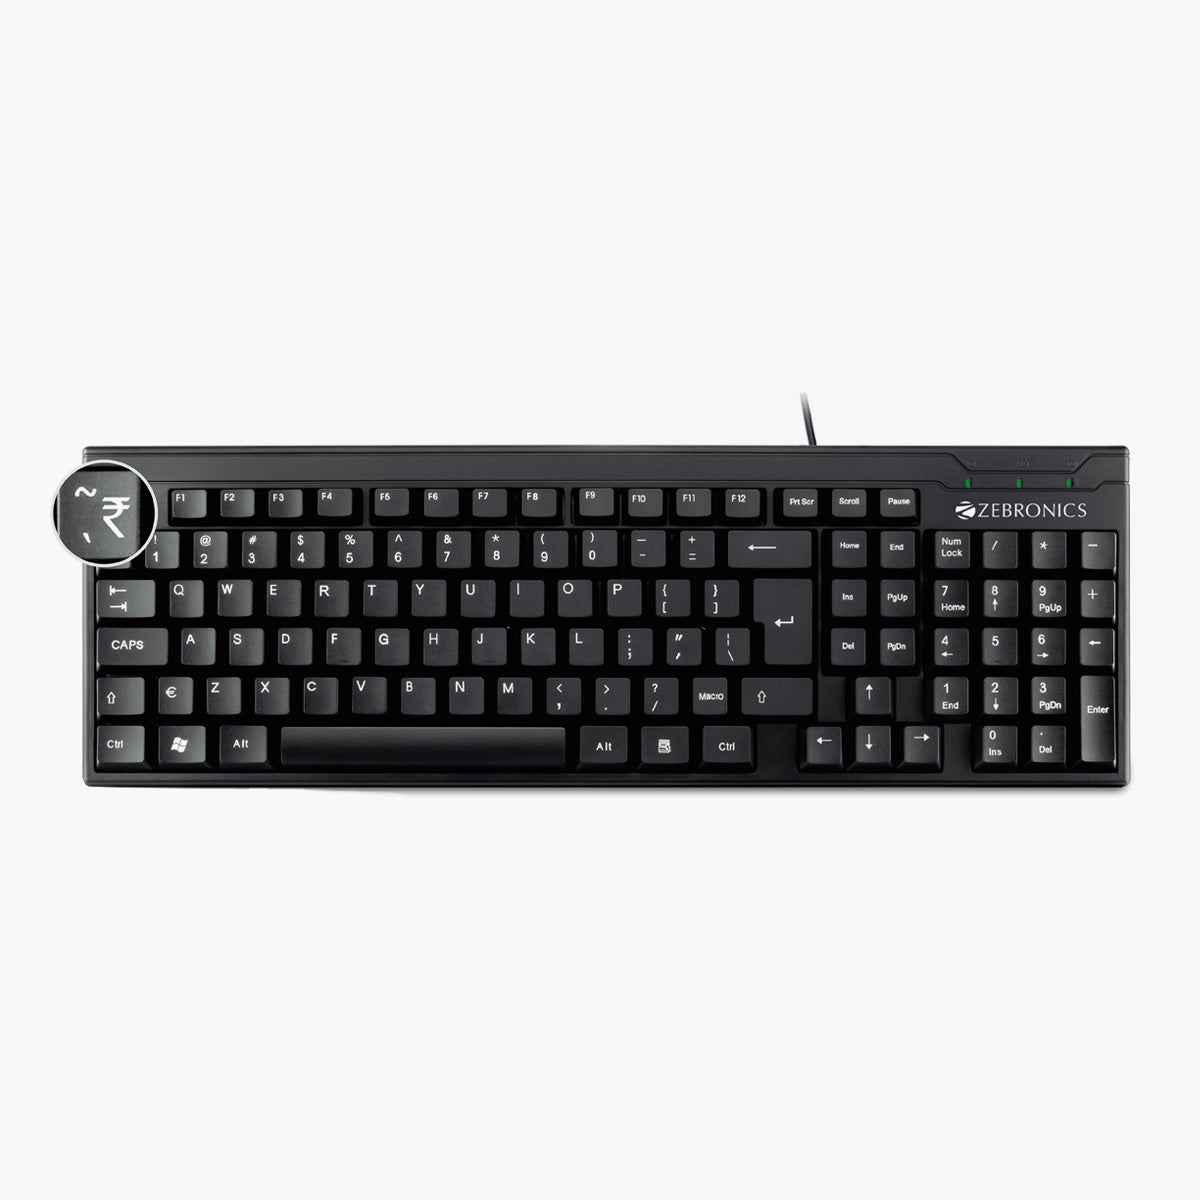 Zeb-K35 - Standard keyboard - Zebronics